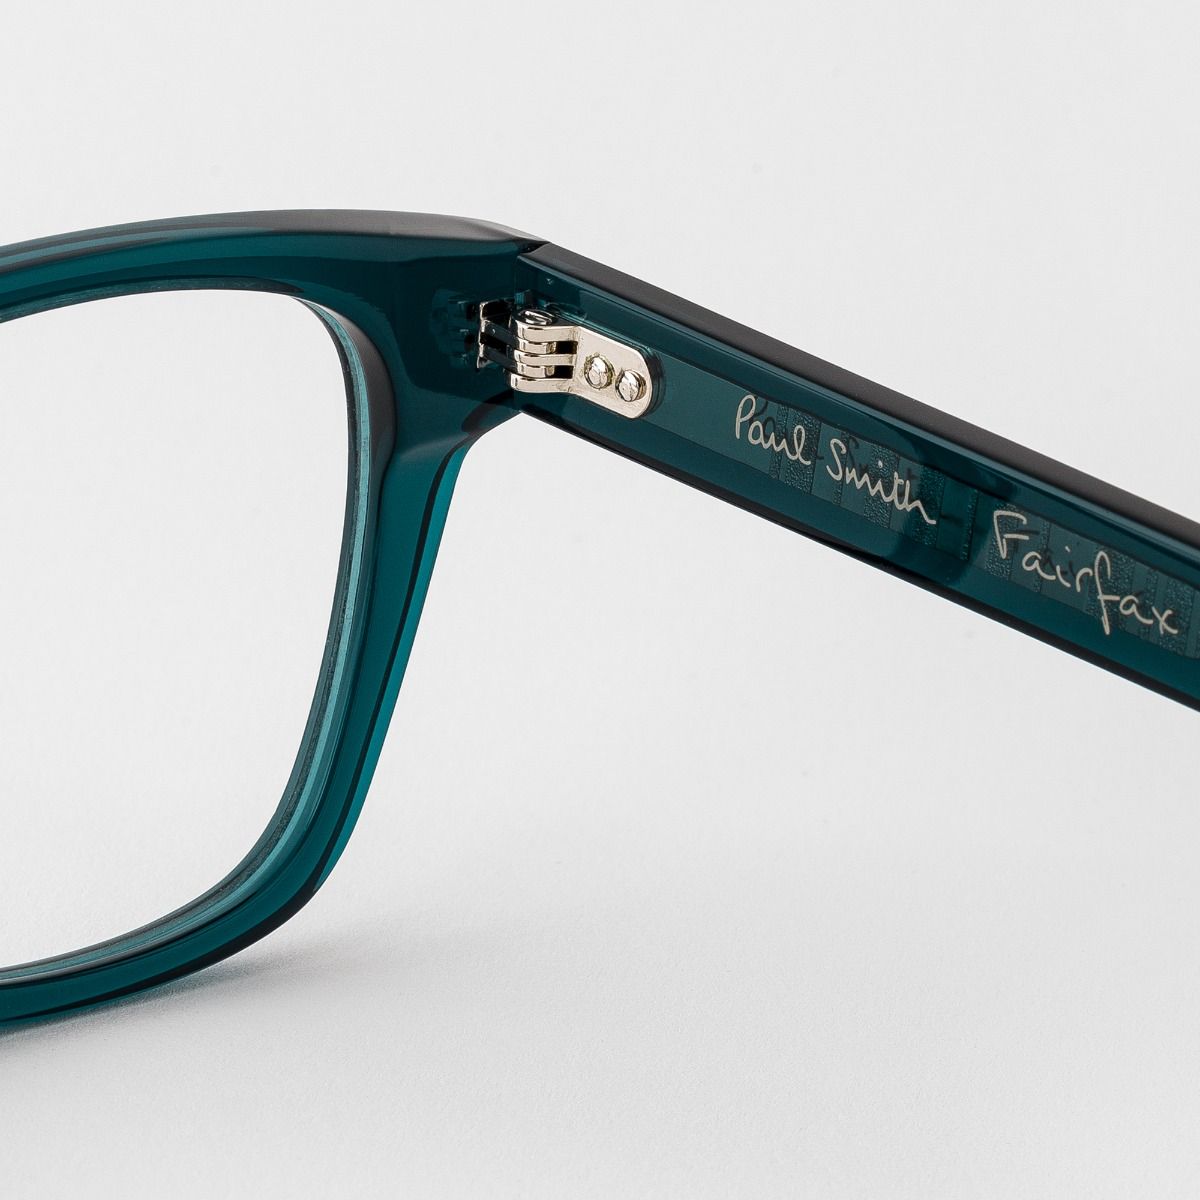 Paul Smith Fairfax Optical Rectangle Glasses